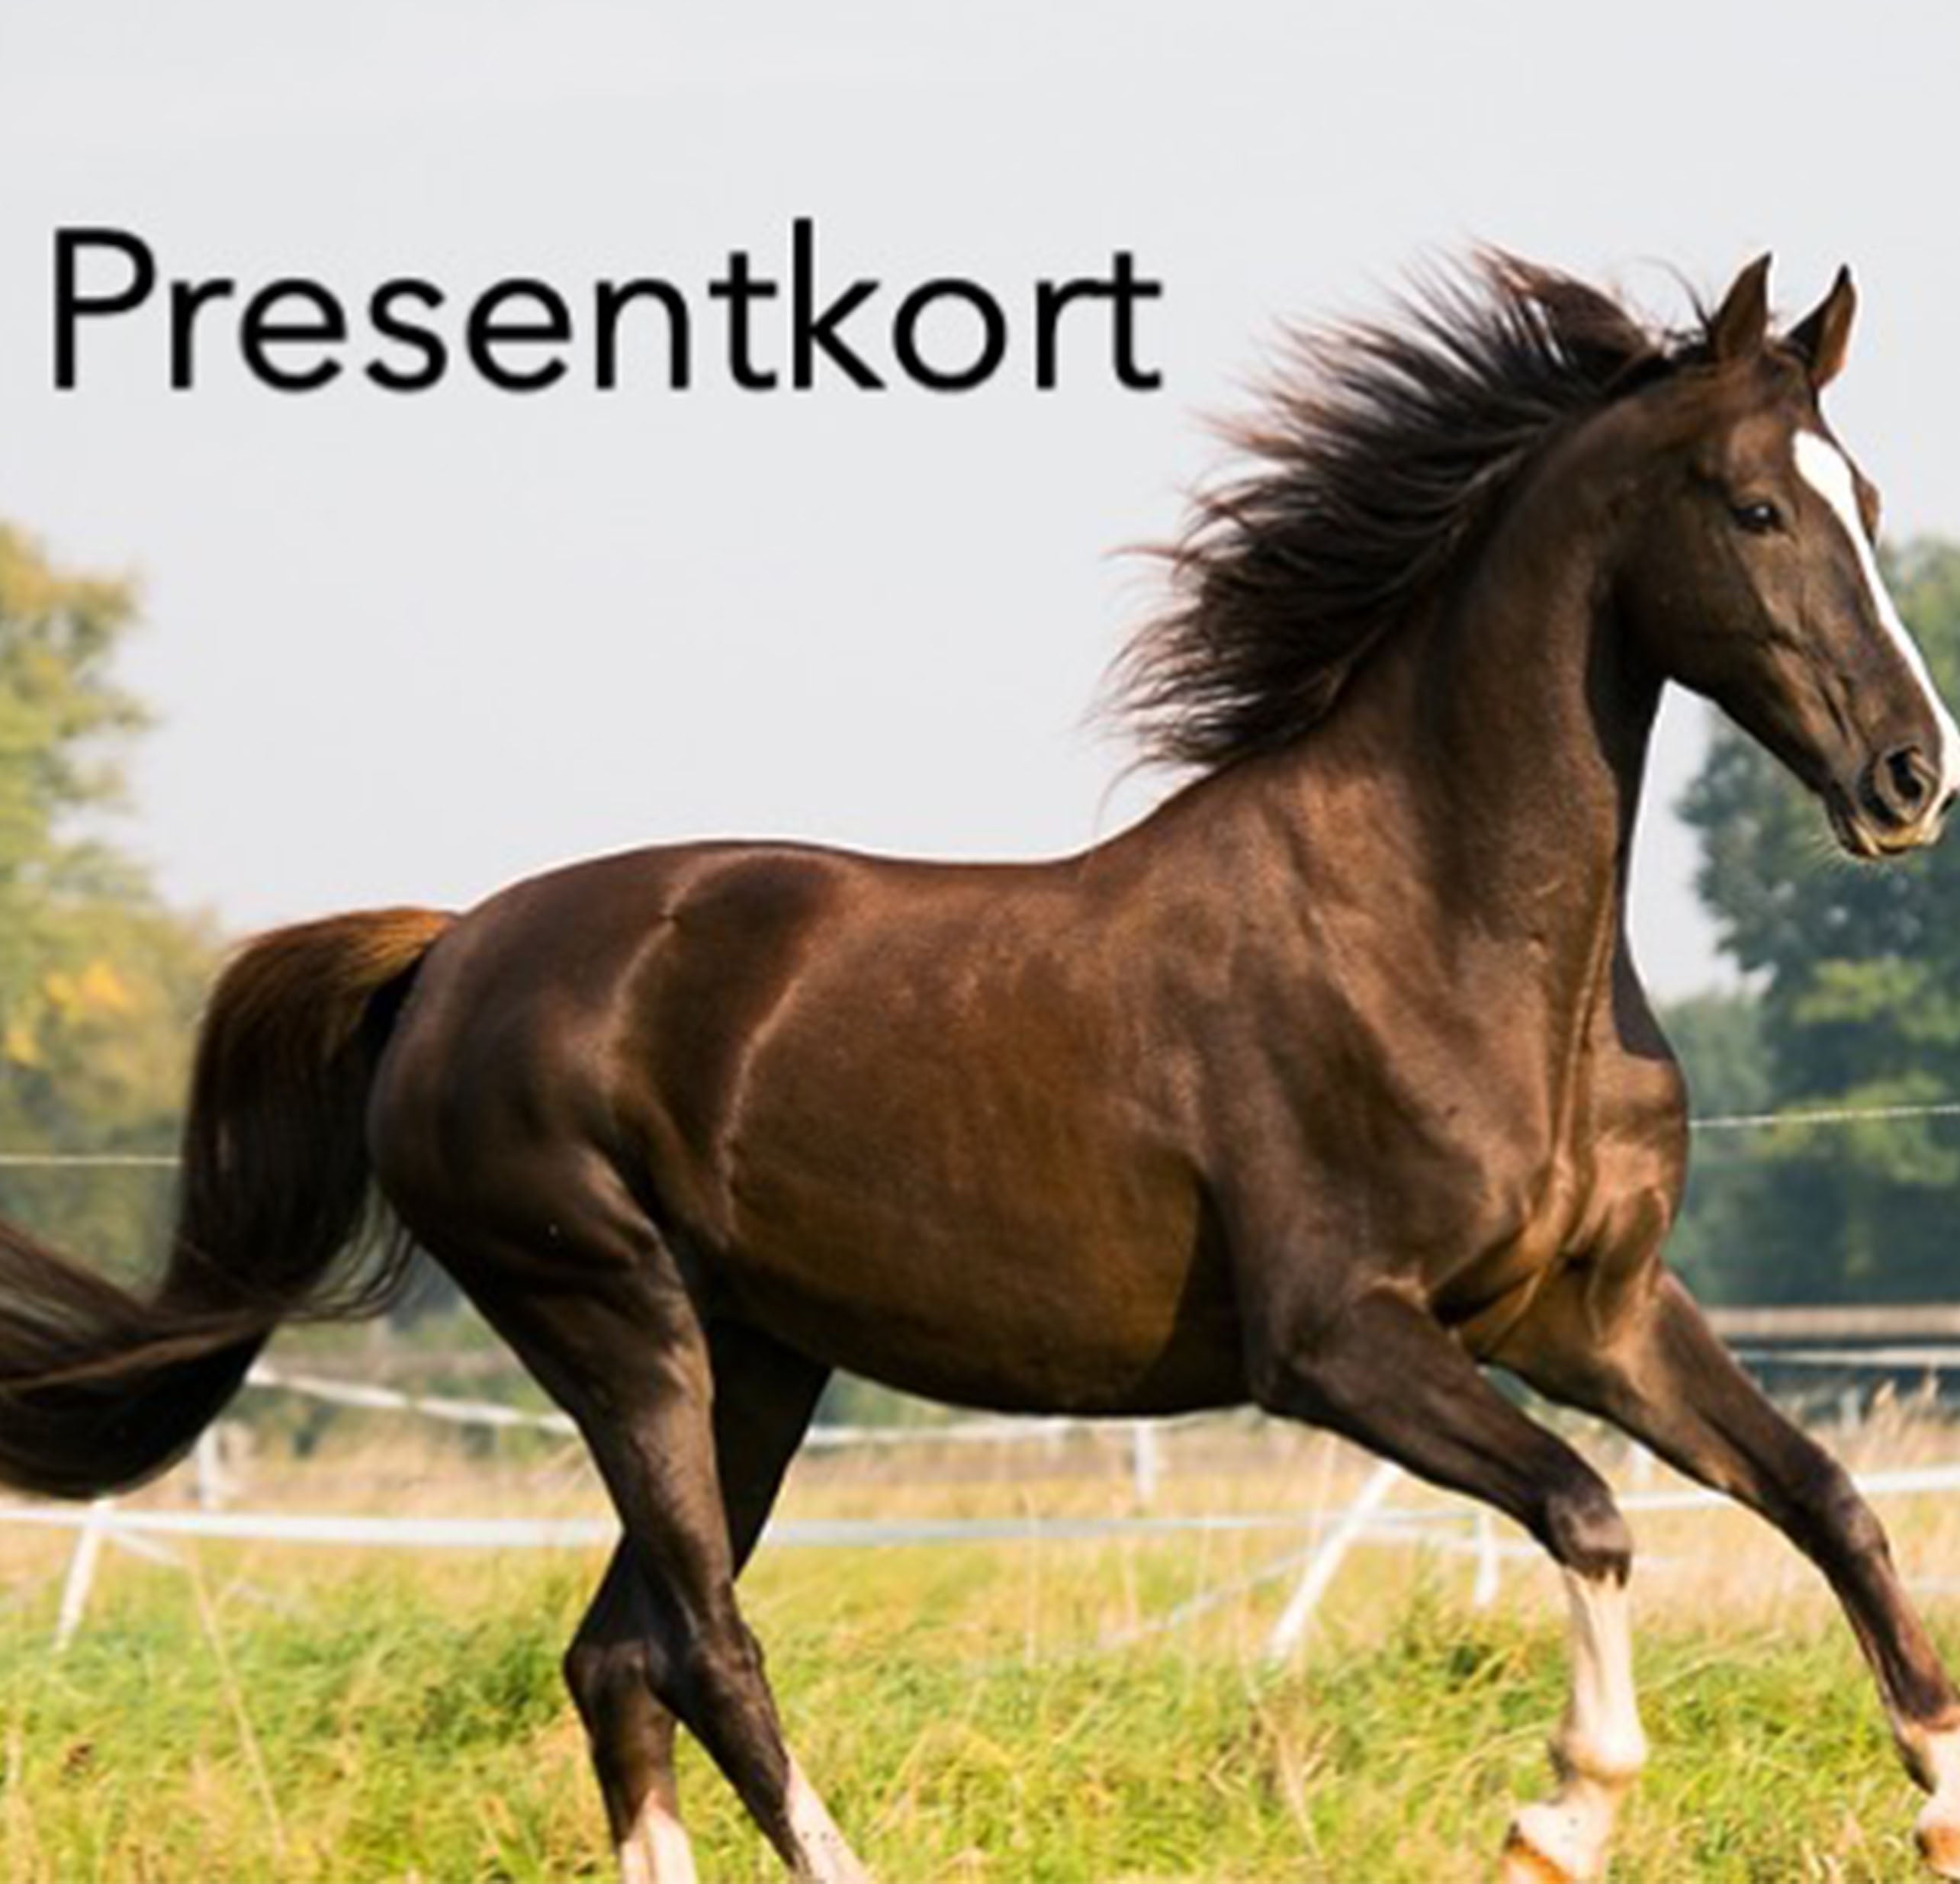 Presentkort By Horse